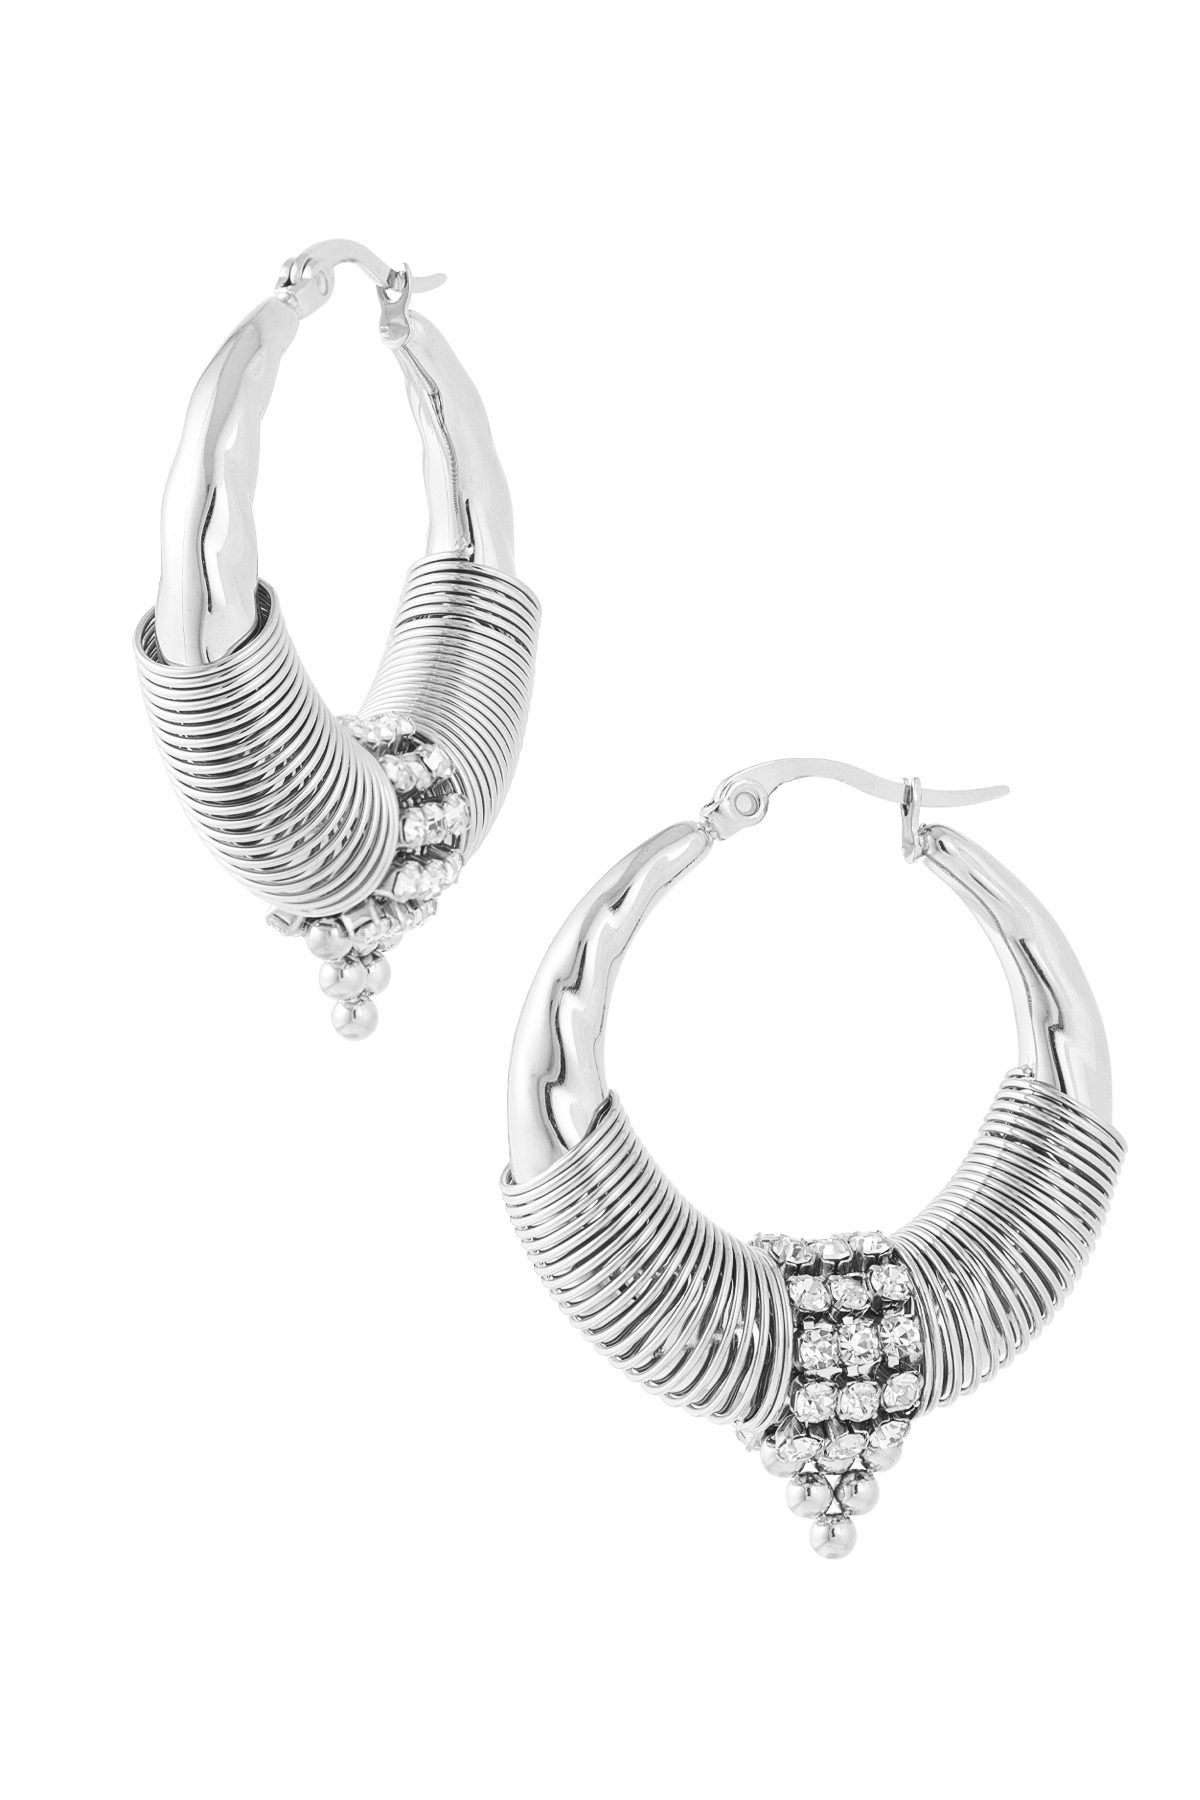 Earrings bohemian vibe - silver